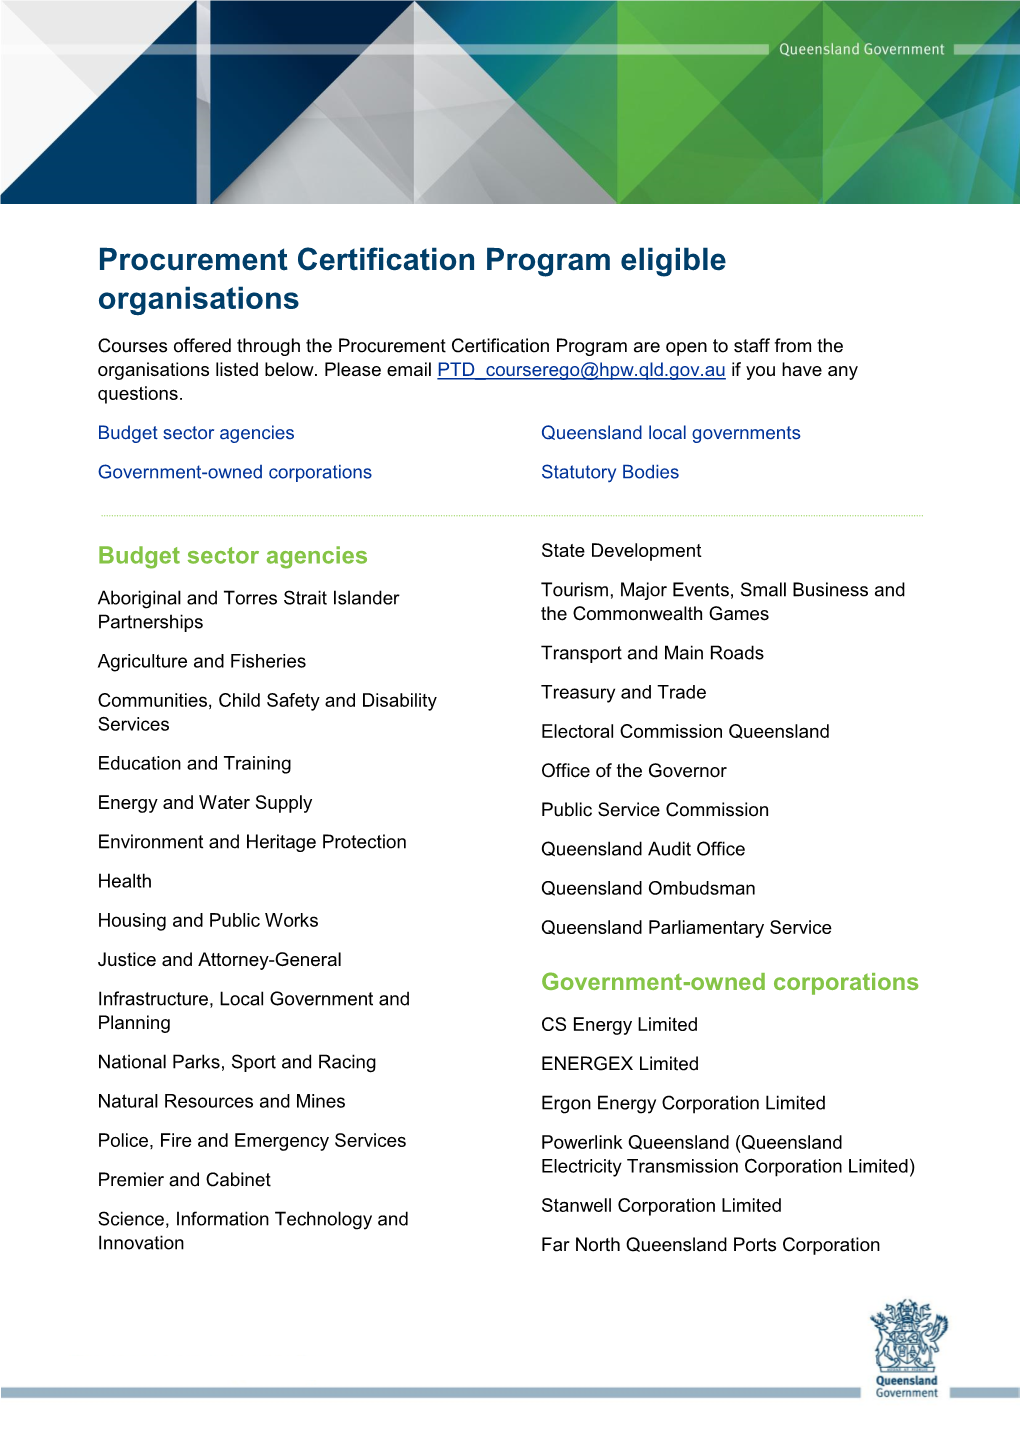 Procurement Certification Program Eligible Organisations